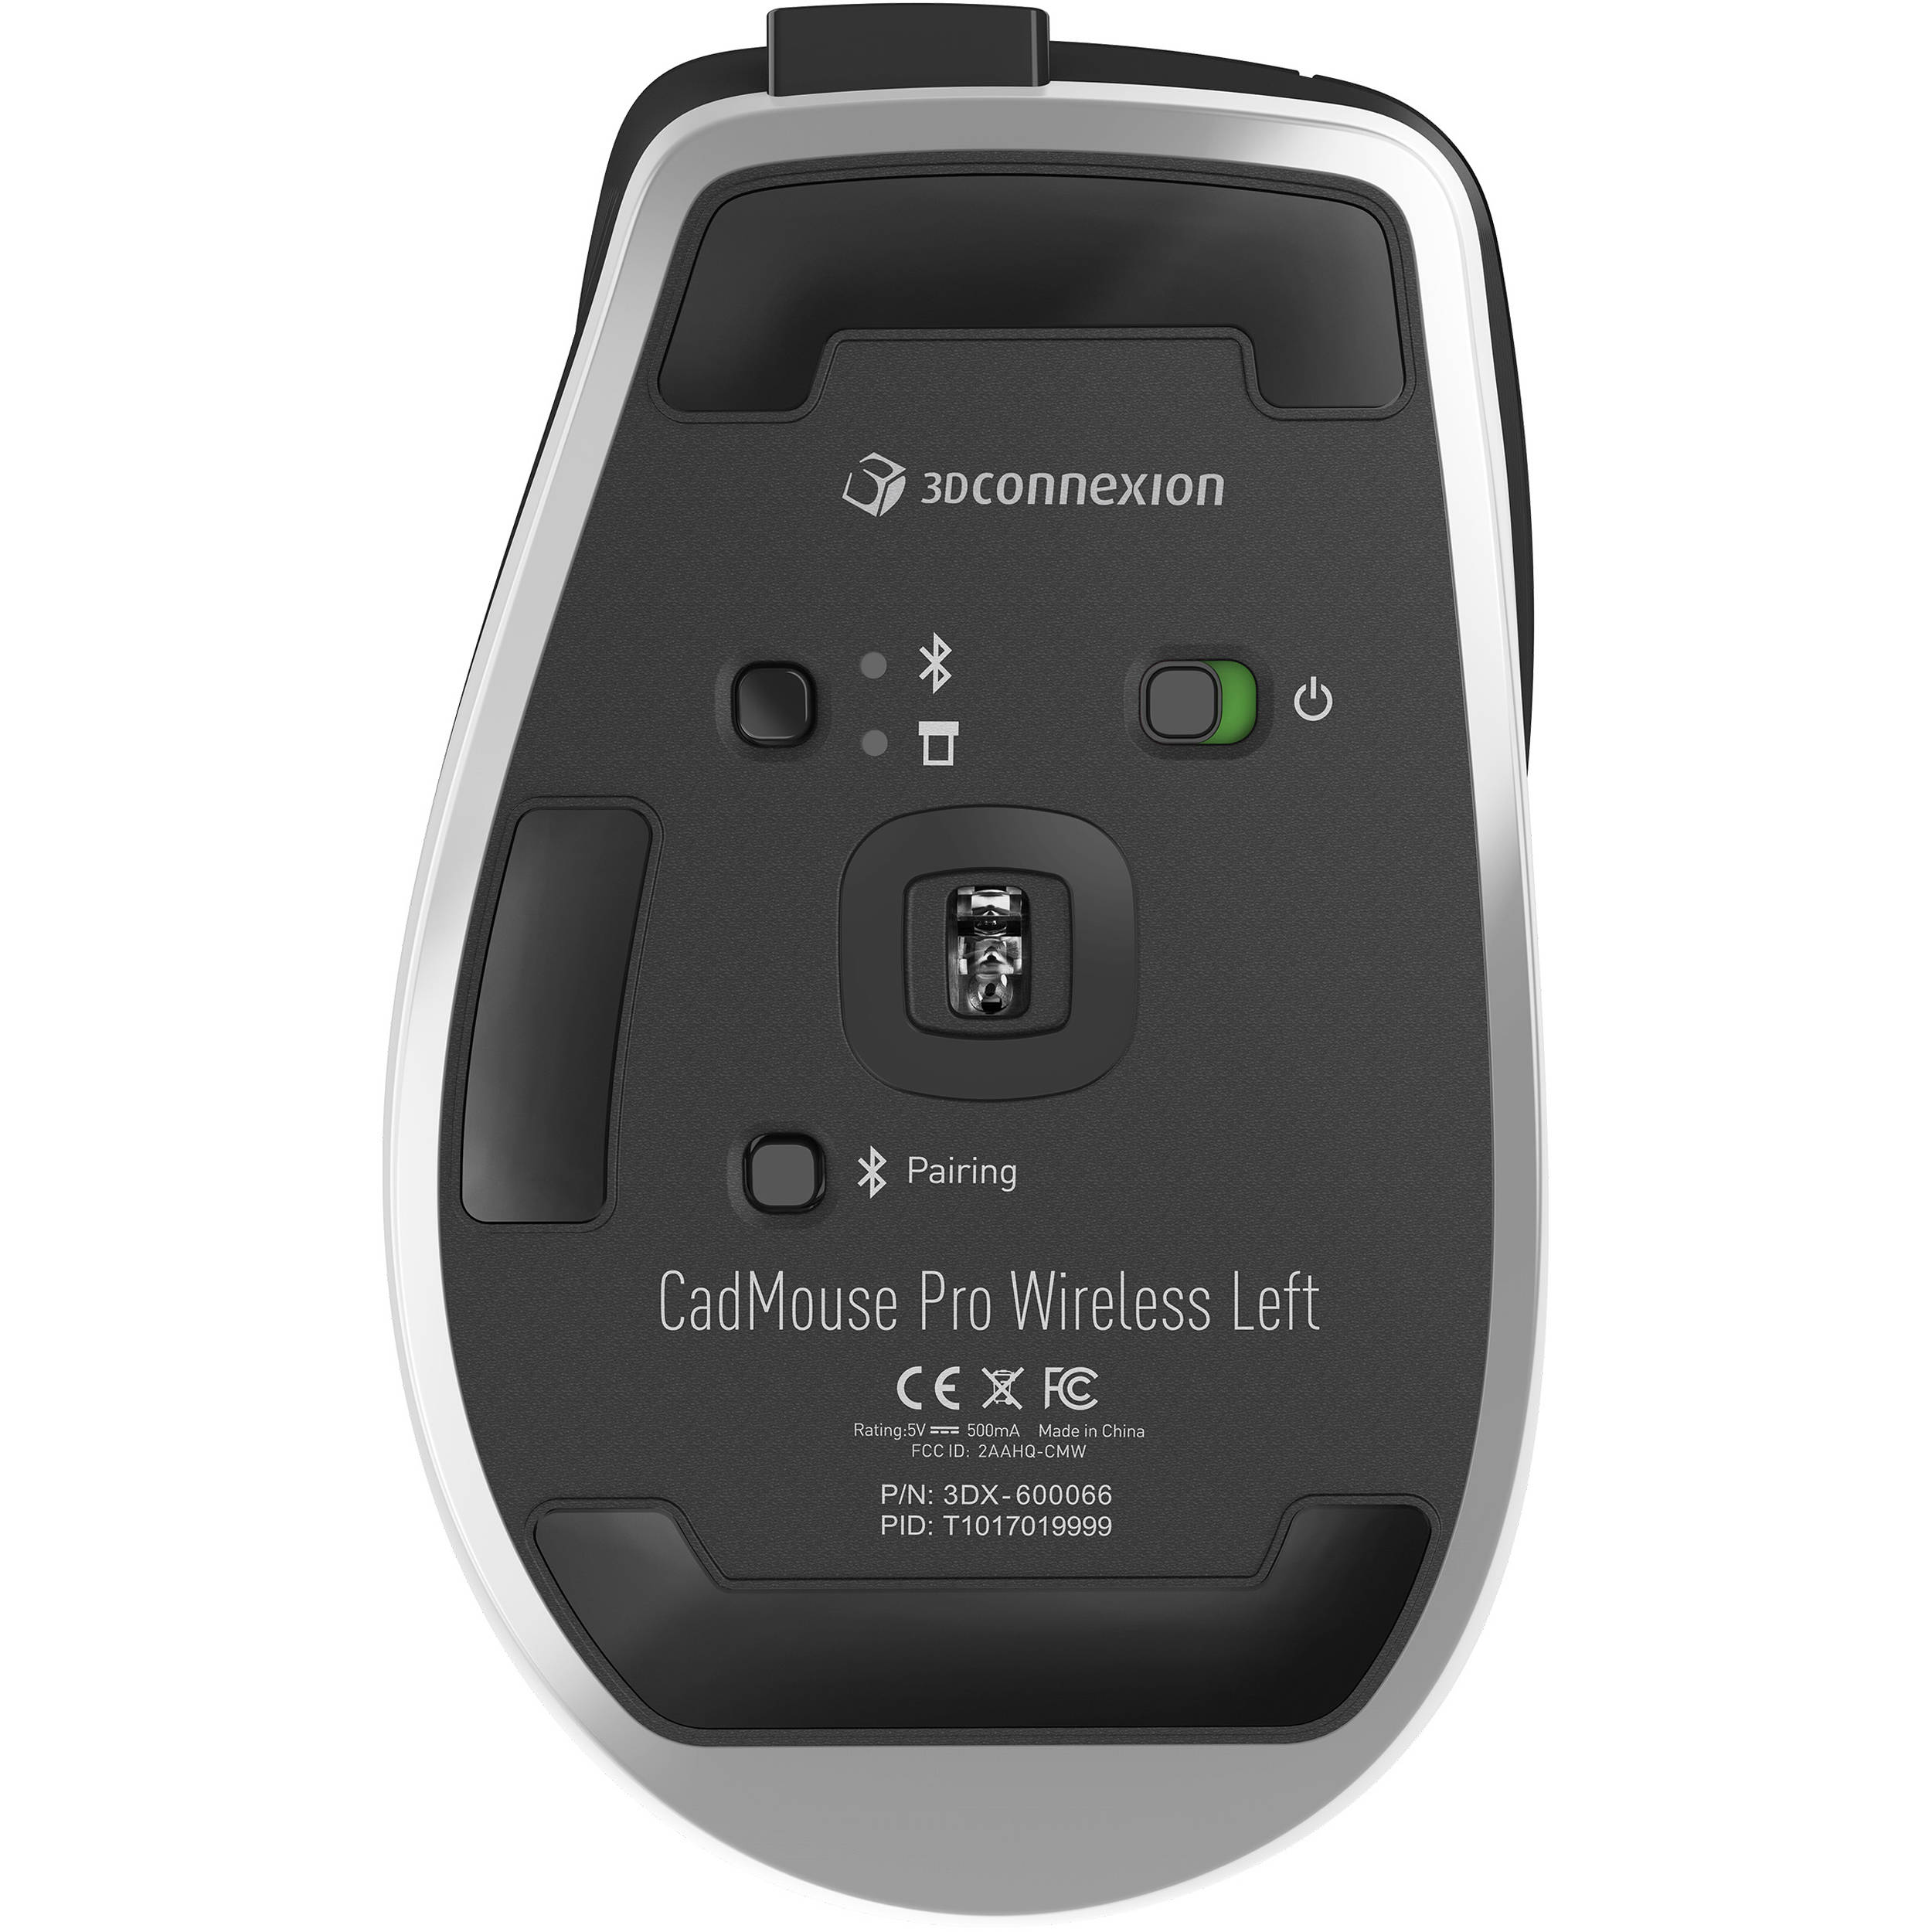 3dconnexion Cadmouse Pro Wireless Left Handed Mouse 3dx 700079